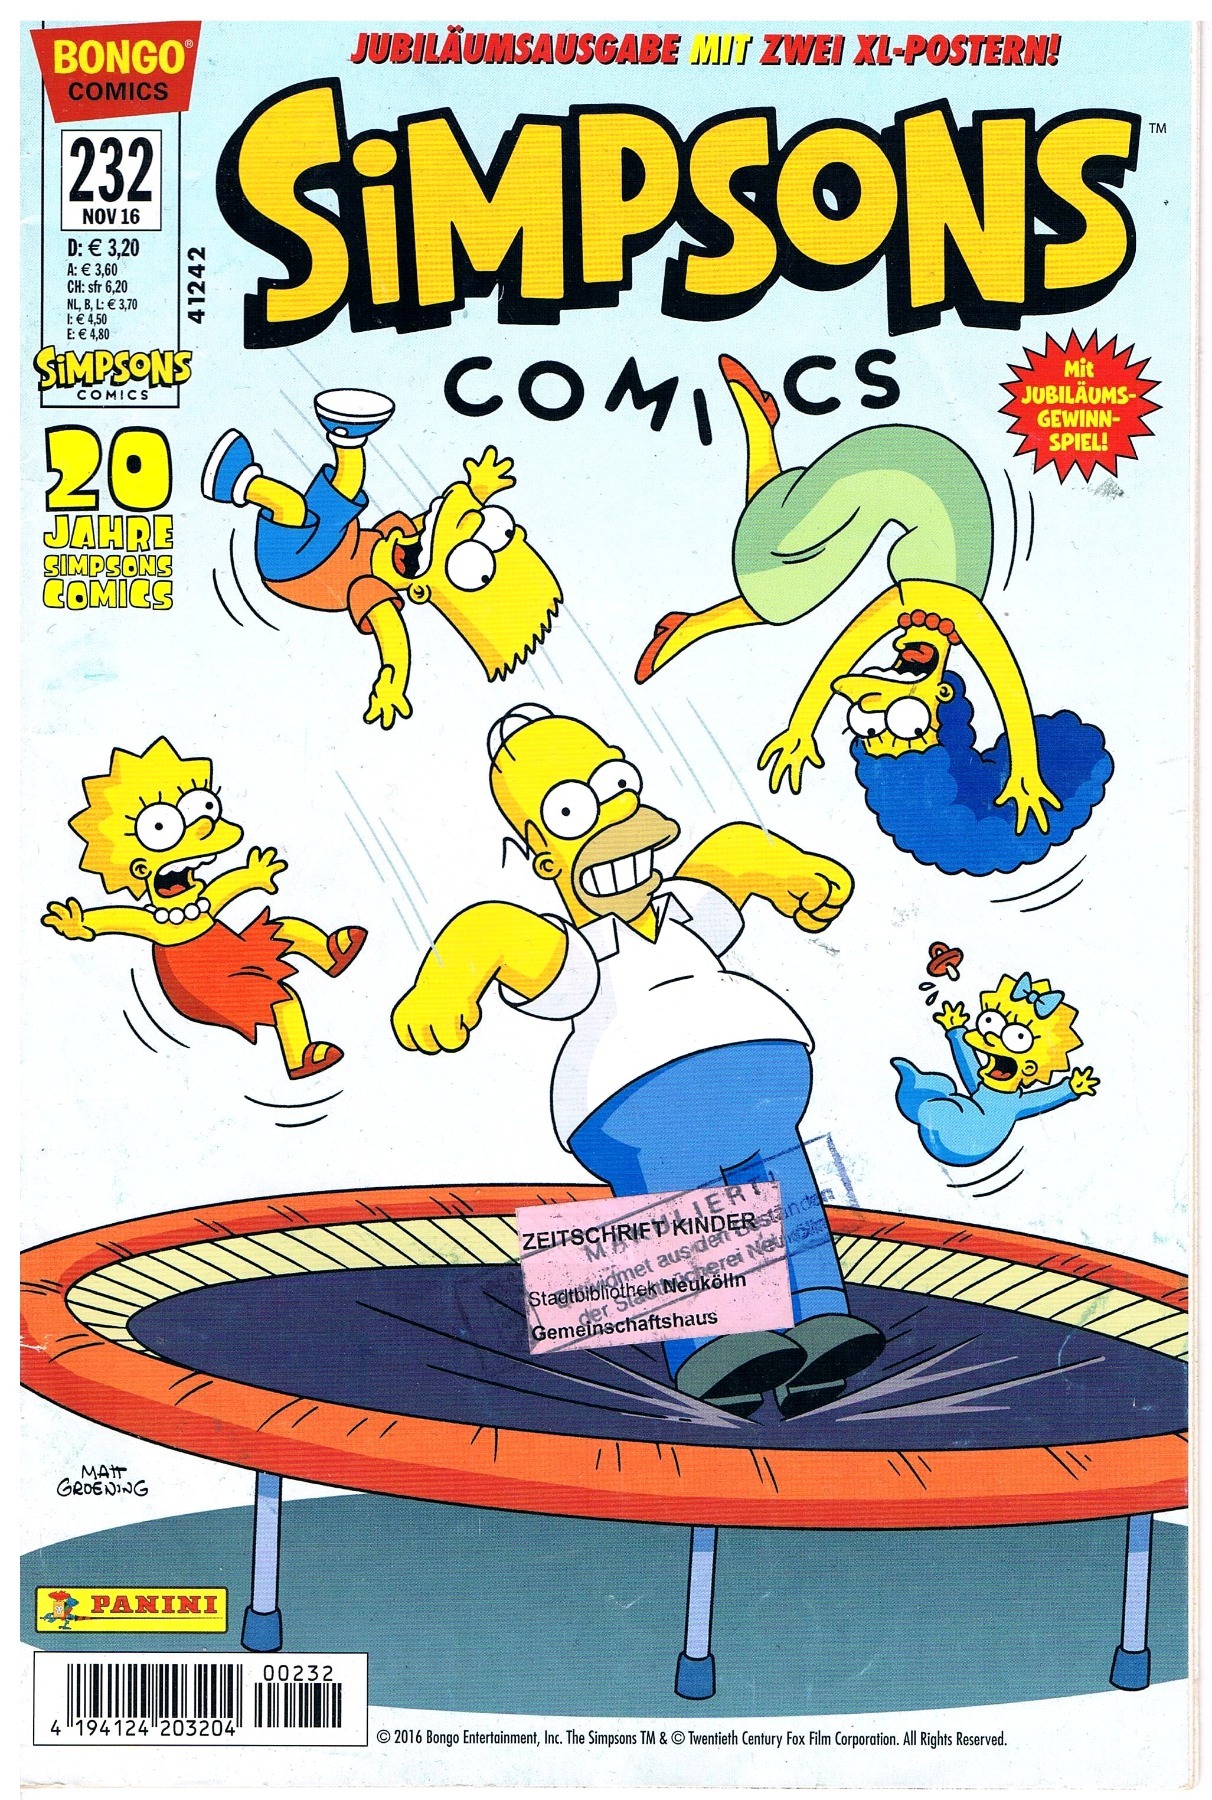 Simpsons Comics - Heft Ausgabe 232 - Nov 16 2016